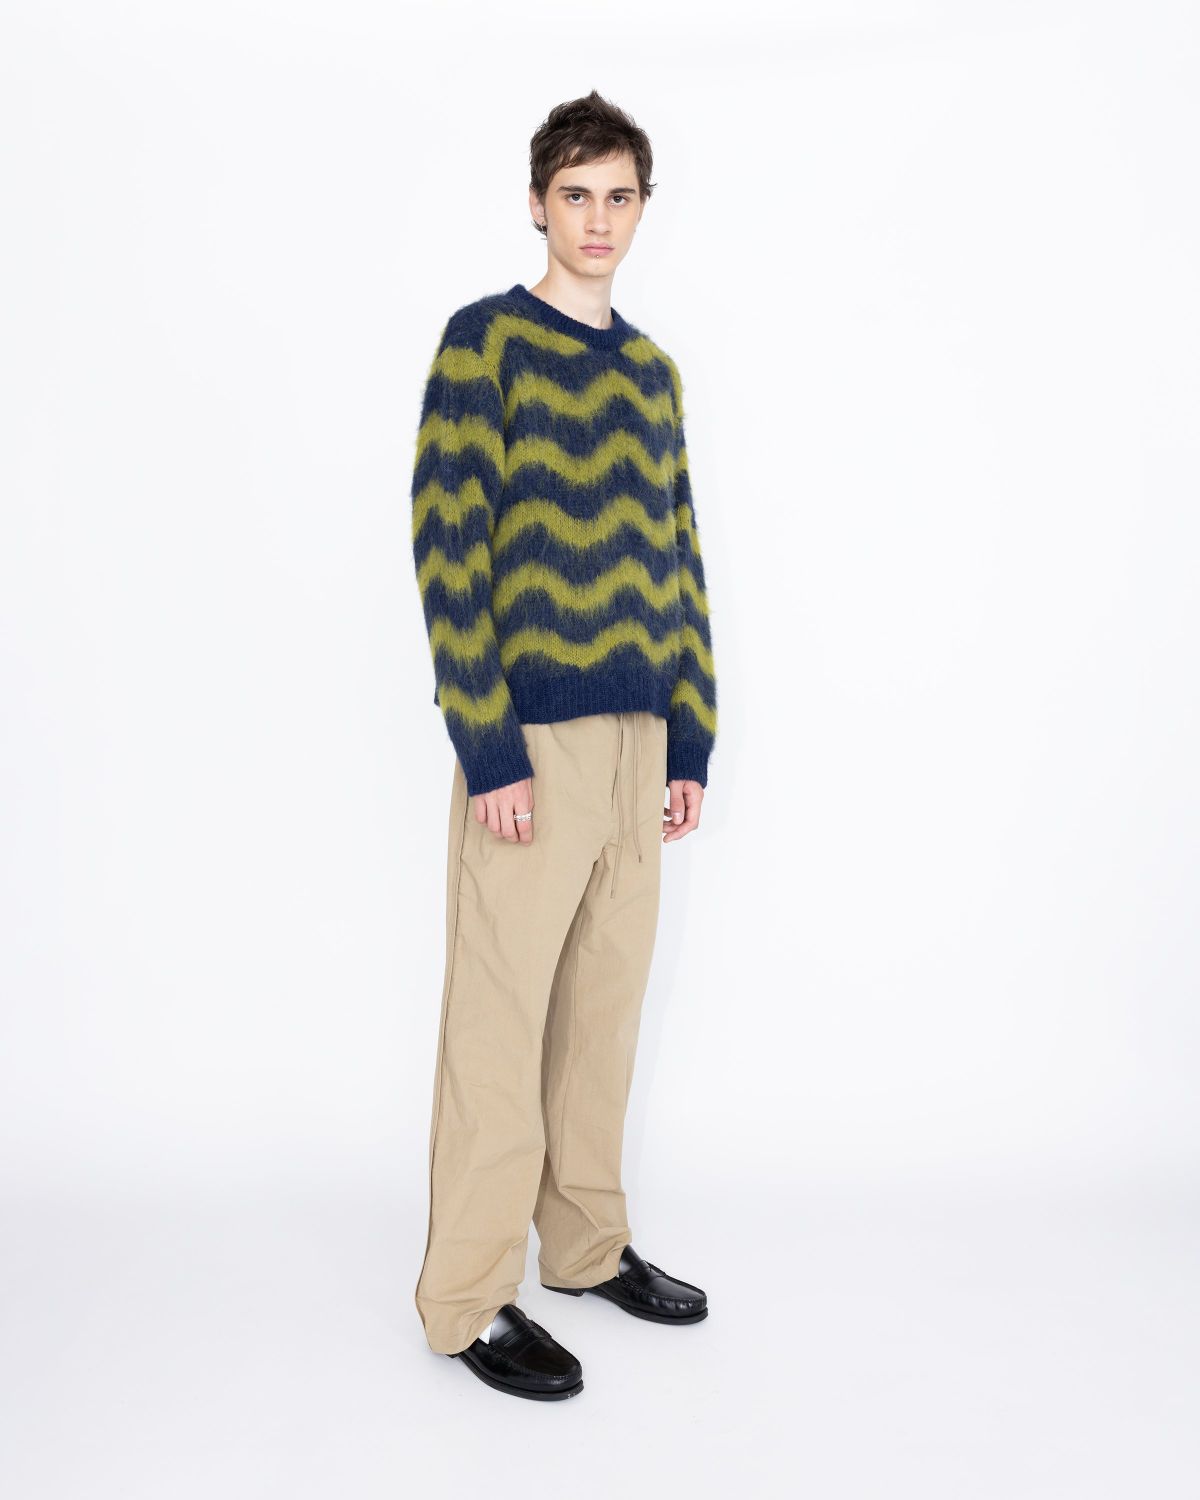 Highsnobiety HS05 – Alpaca Fuzzy Wave Sweater Navy/Olive Green - Knitwear - Multi - Image 4